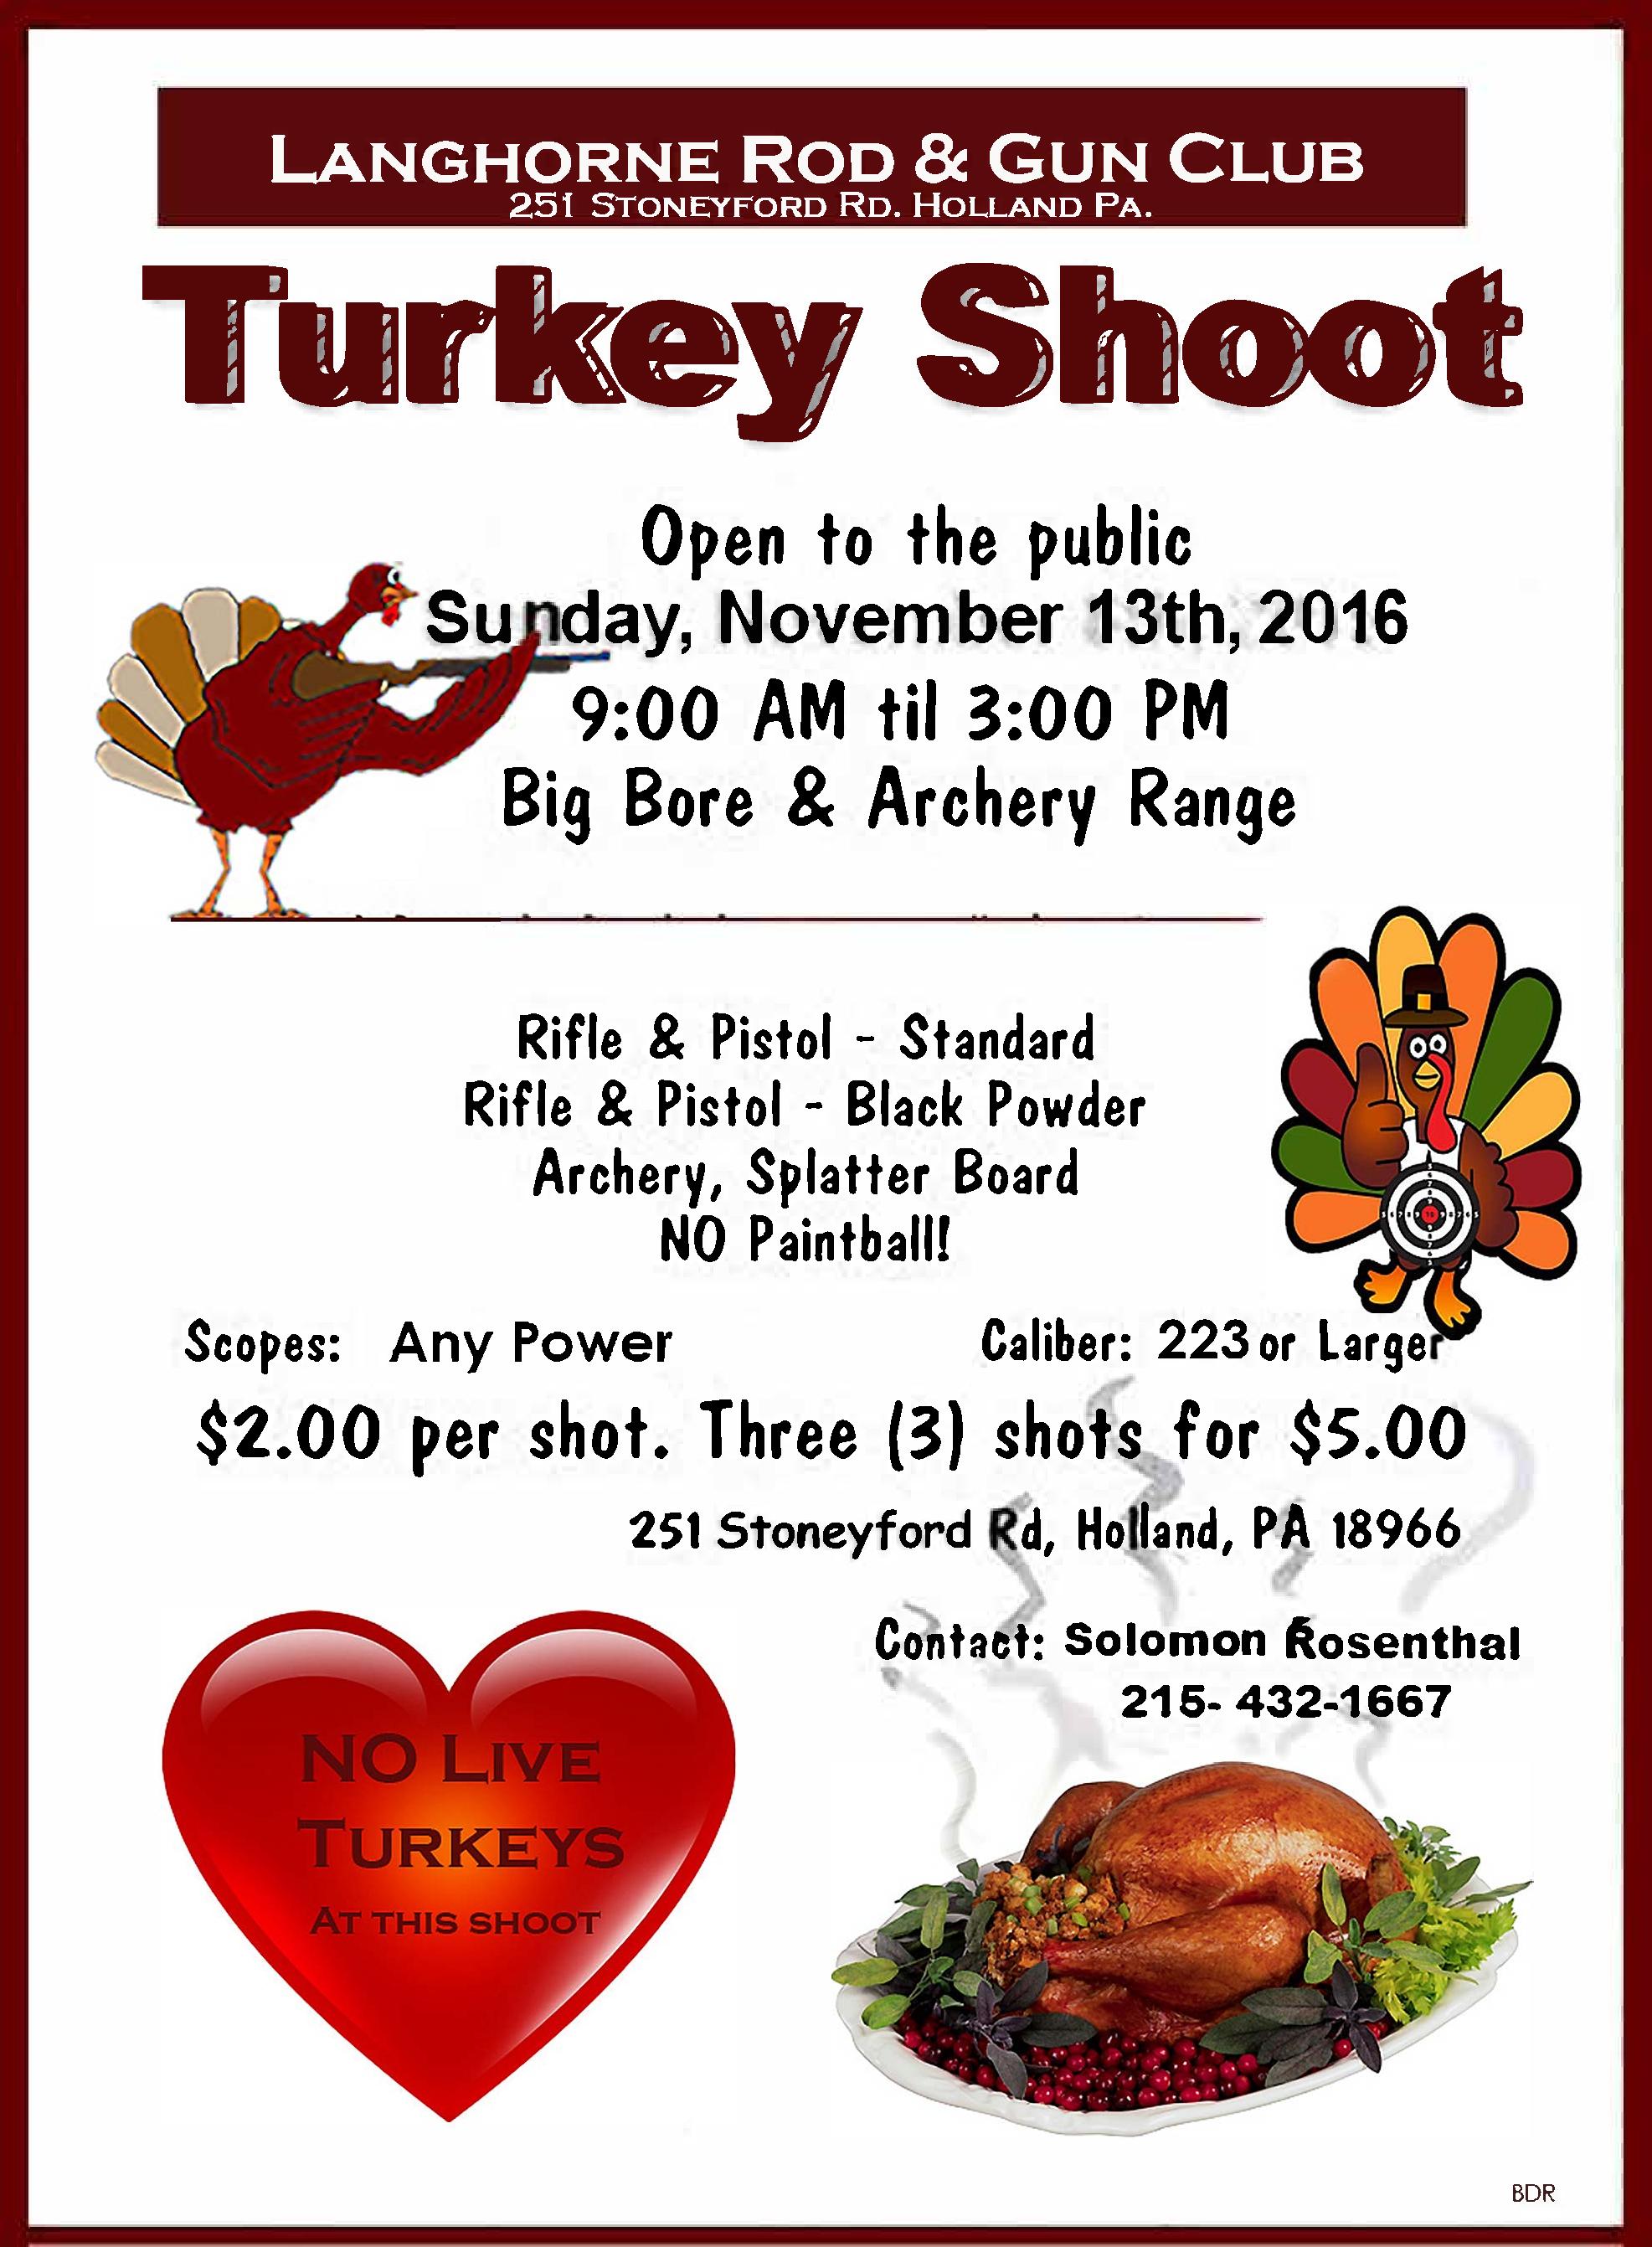 turkey-shoot-langhorne-rod-gun-club